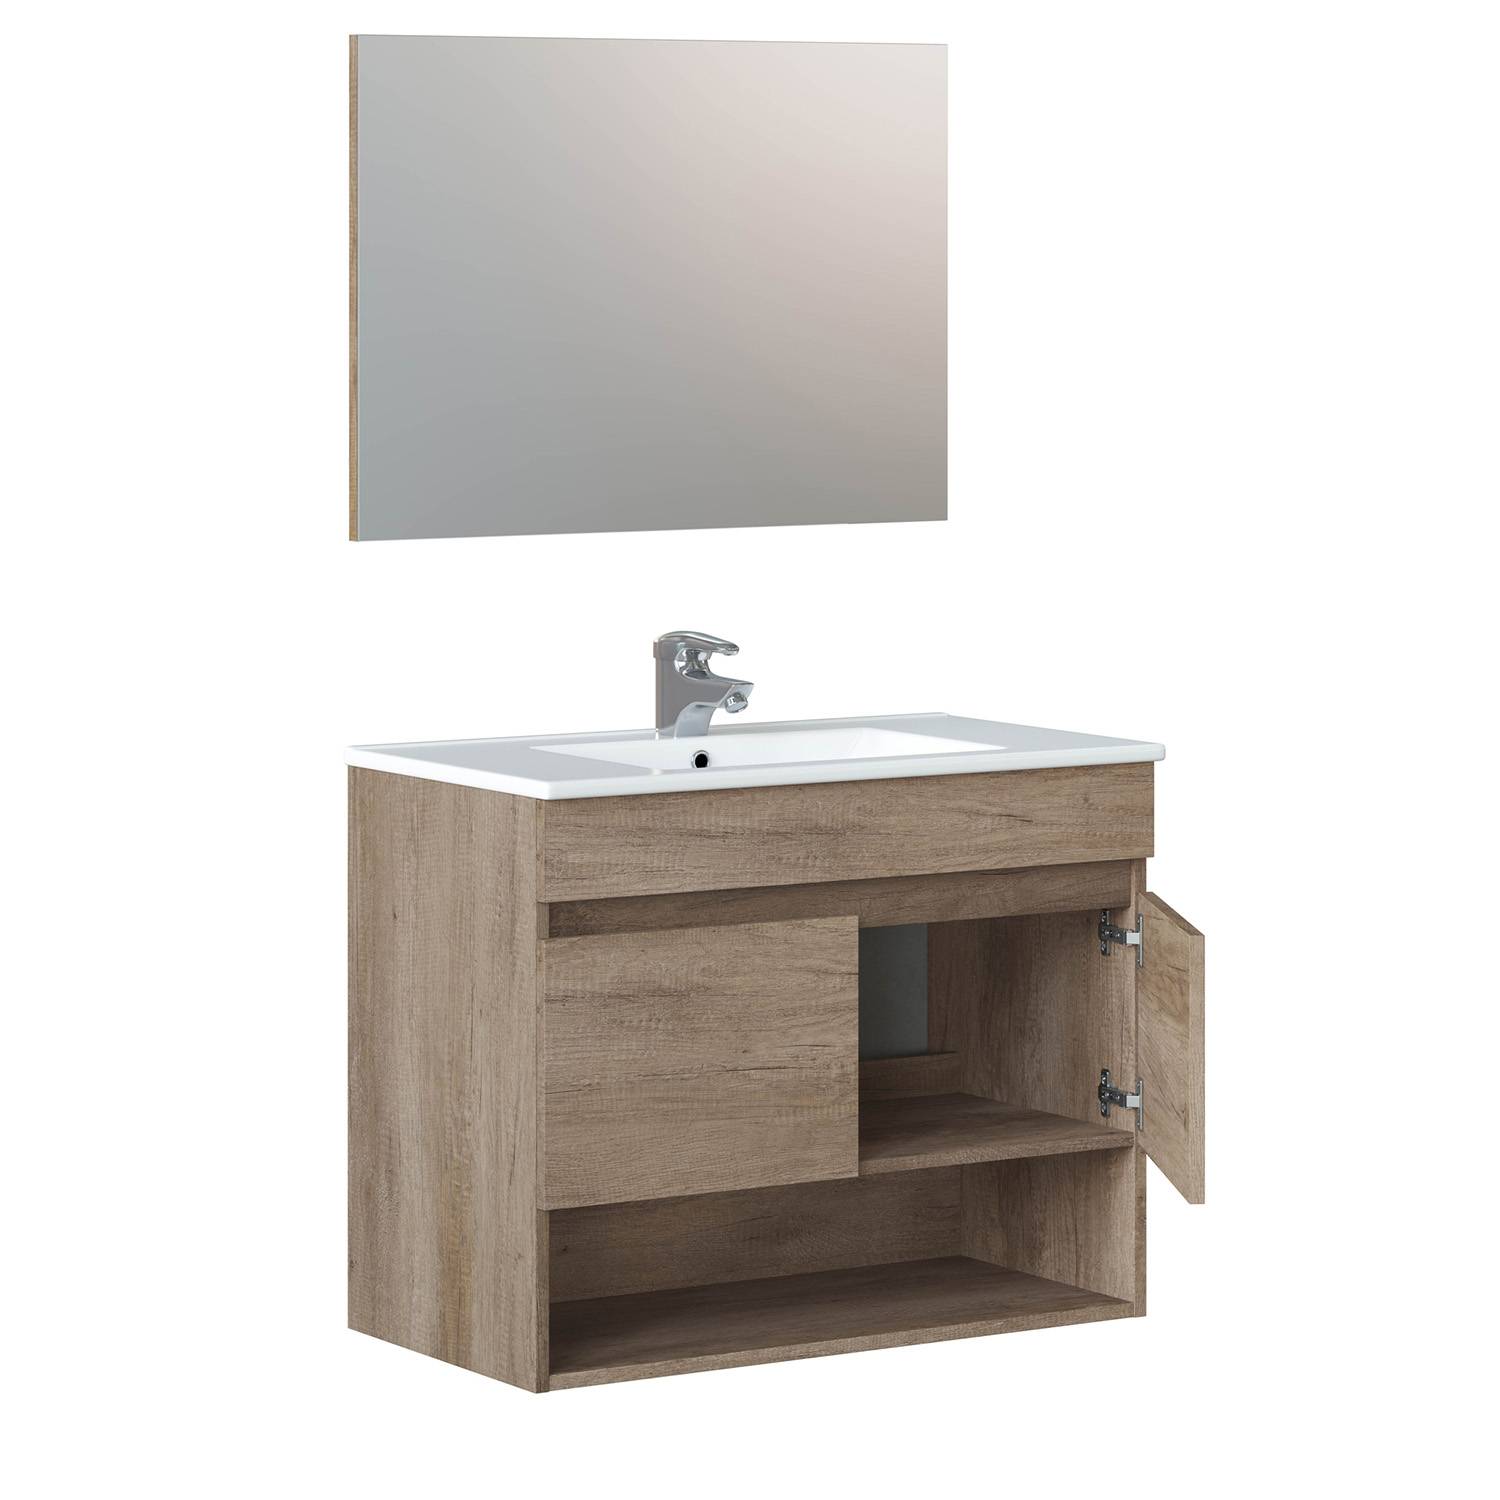 Pack Mueble de Baño Qatar con espejo + Lavabo + Col.